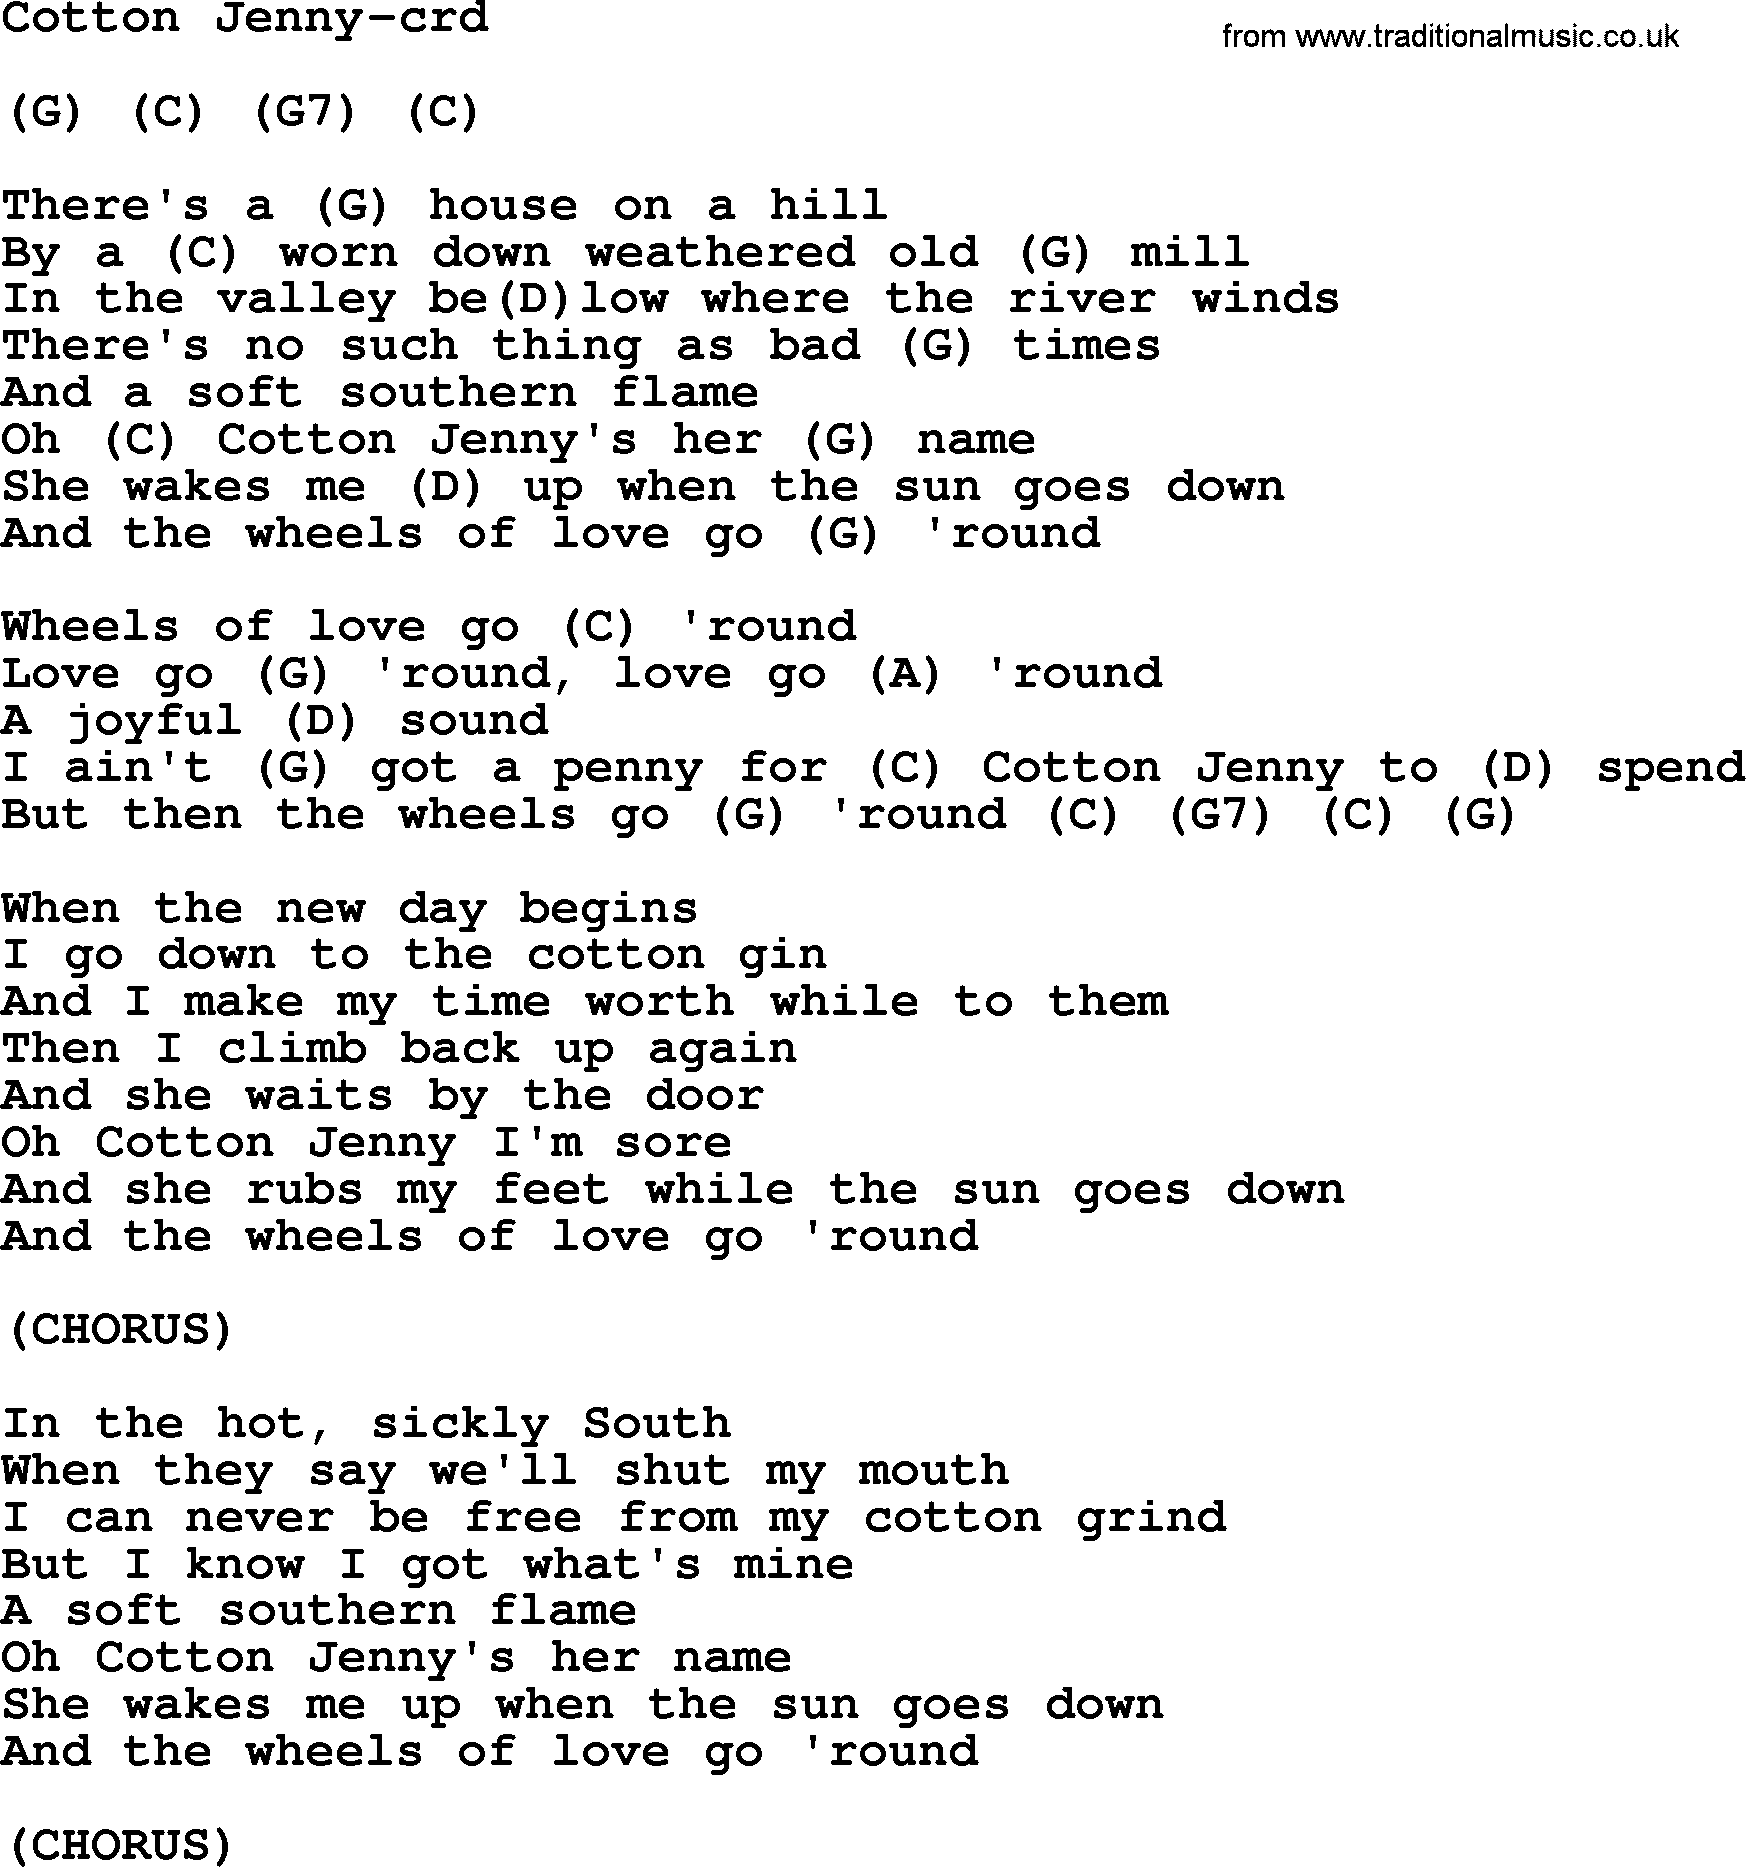 Gordon Lightfoot song Cotton Jenny, lyrics and chords